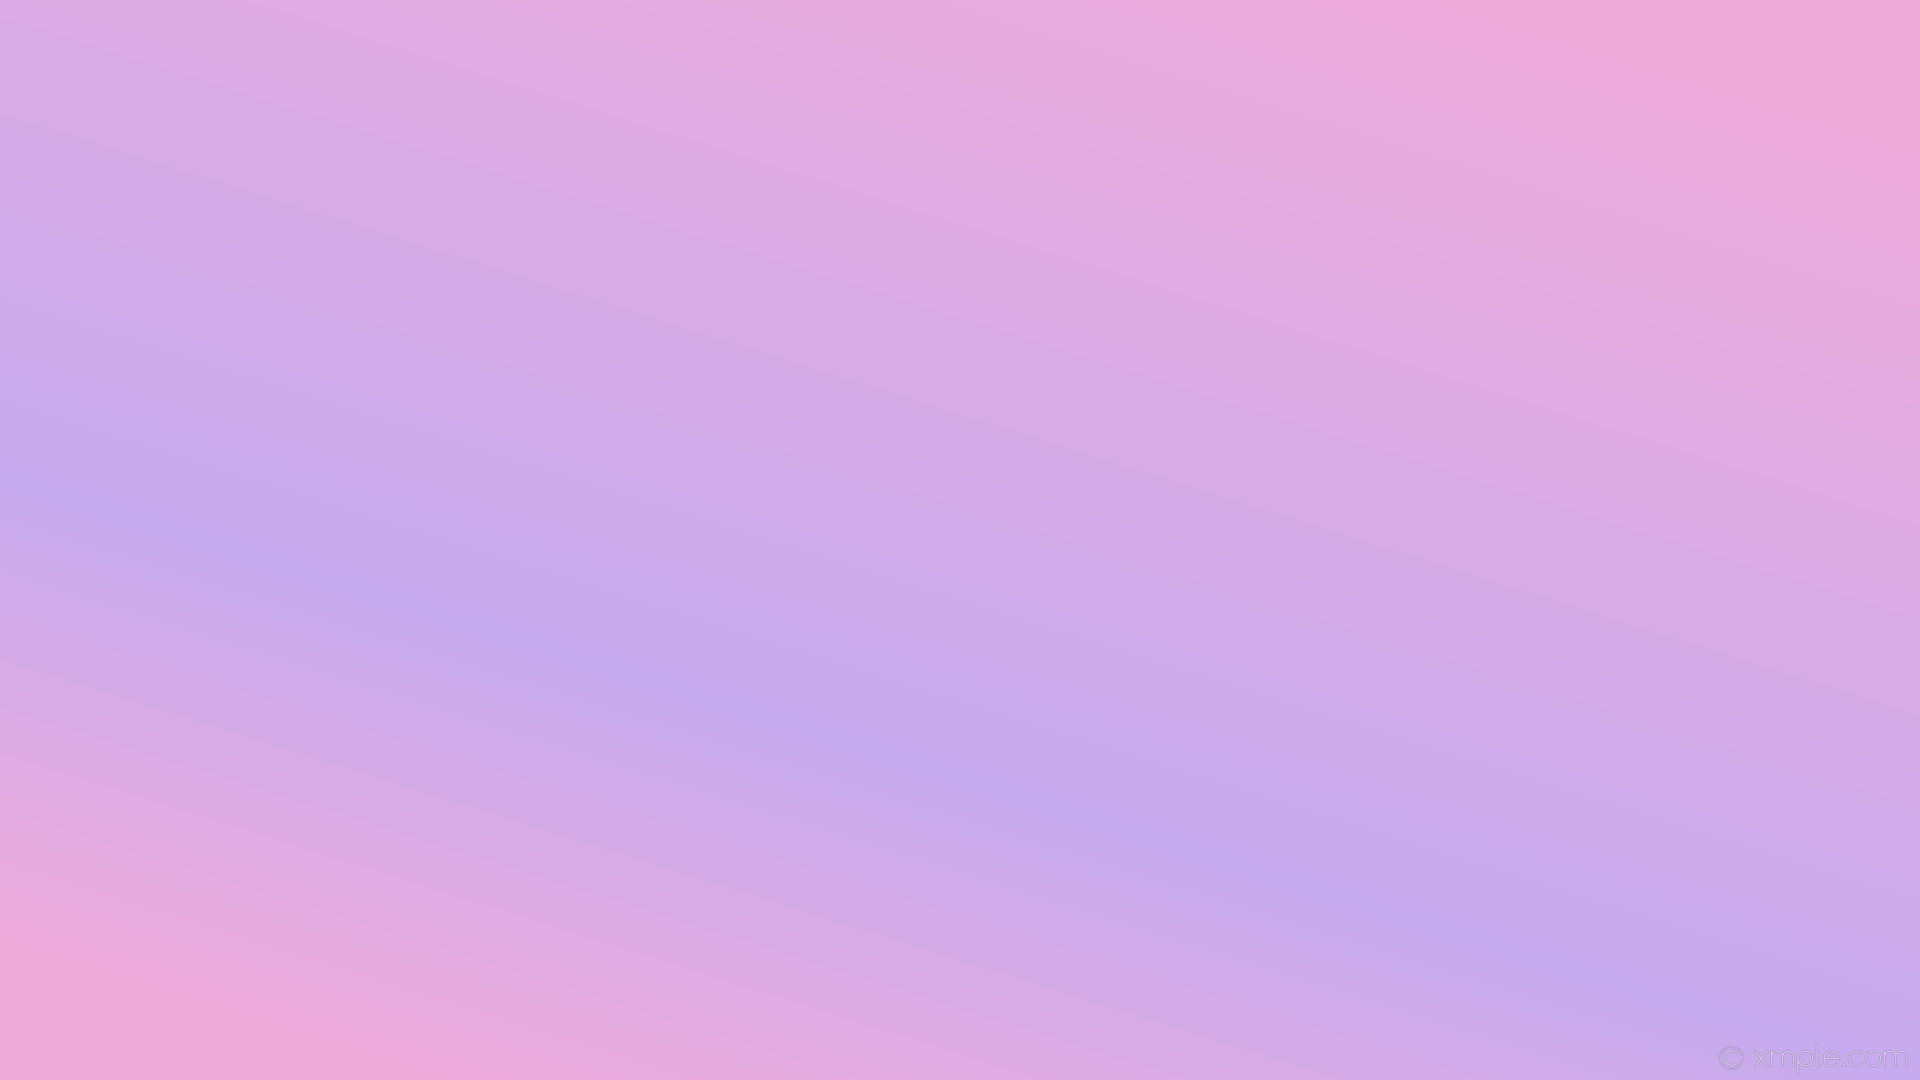 1920x1080 wallpaper linear pink violet highlight gradient light pink light violet  #eeabda #c6abee 45Â°